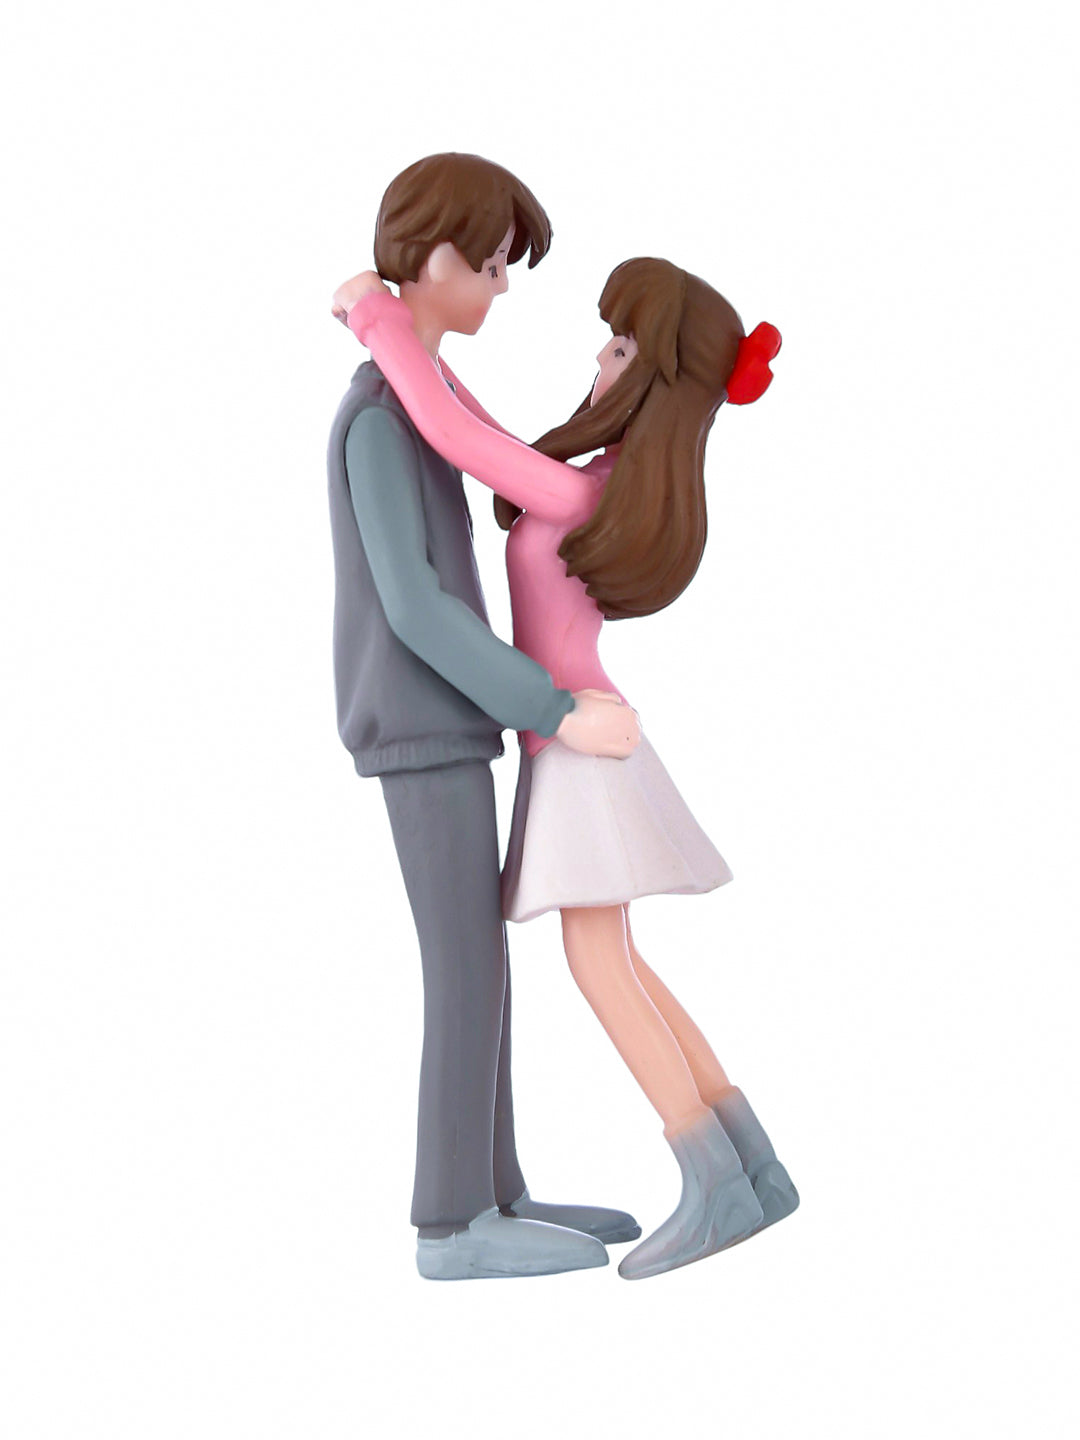 Love's Embrace Figurine